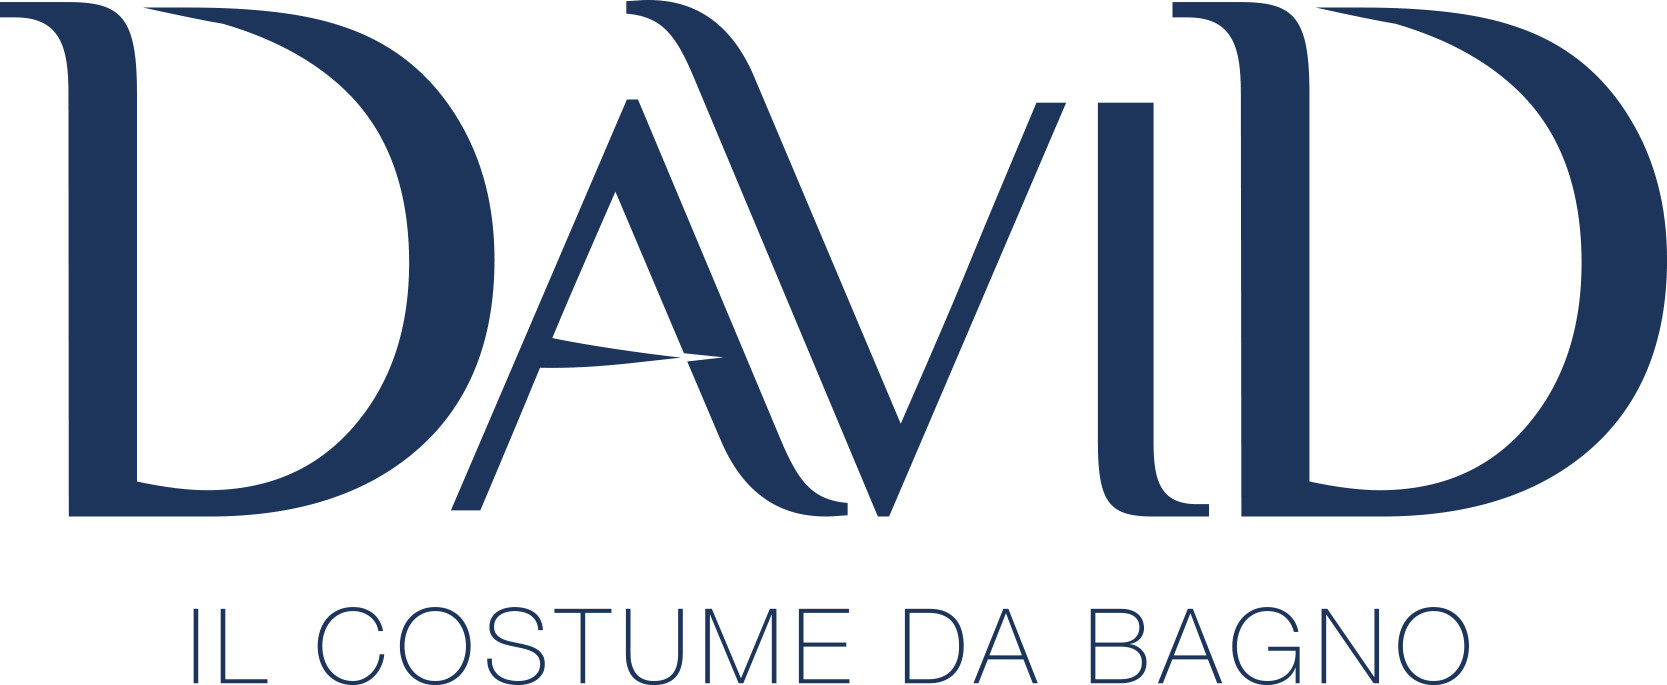 David Swimwear